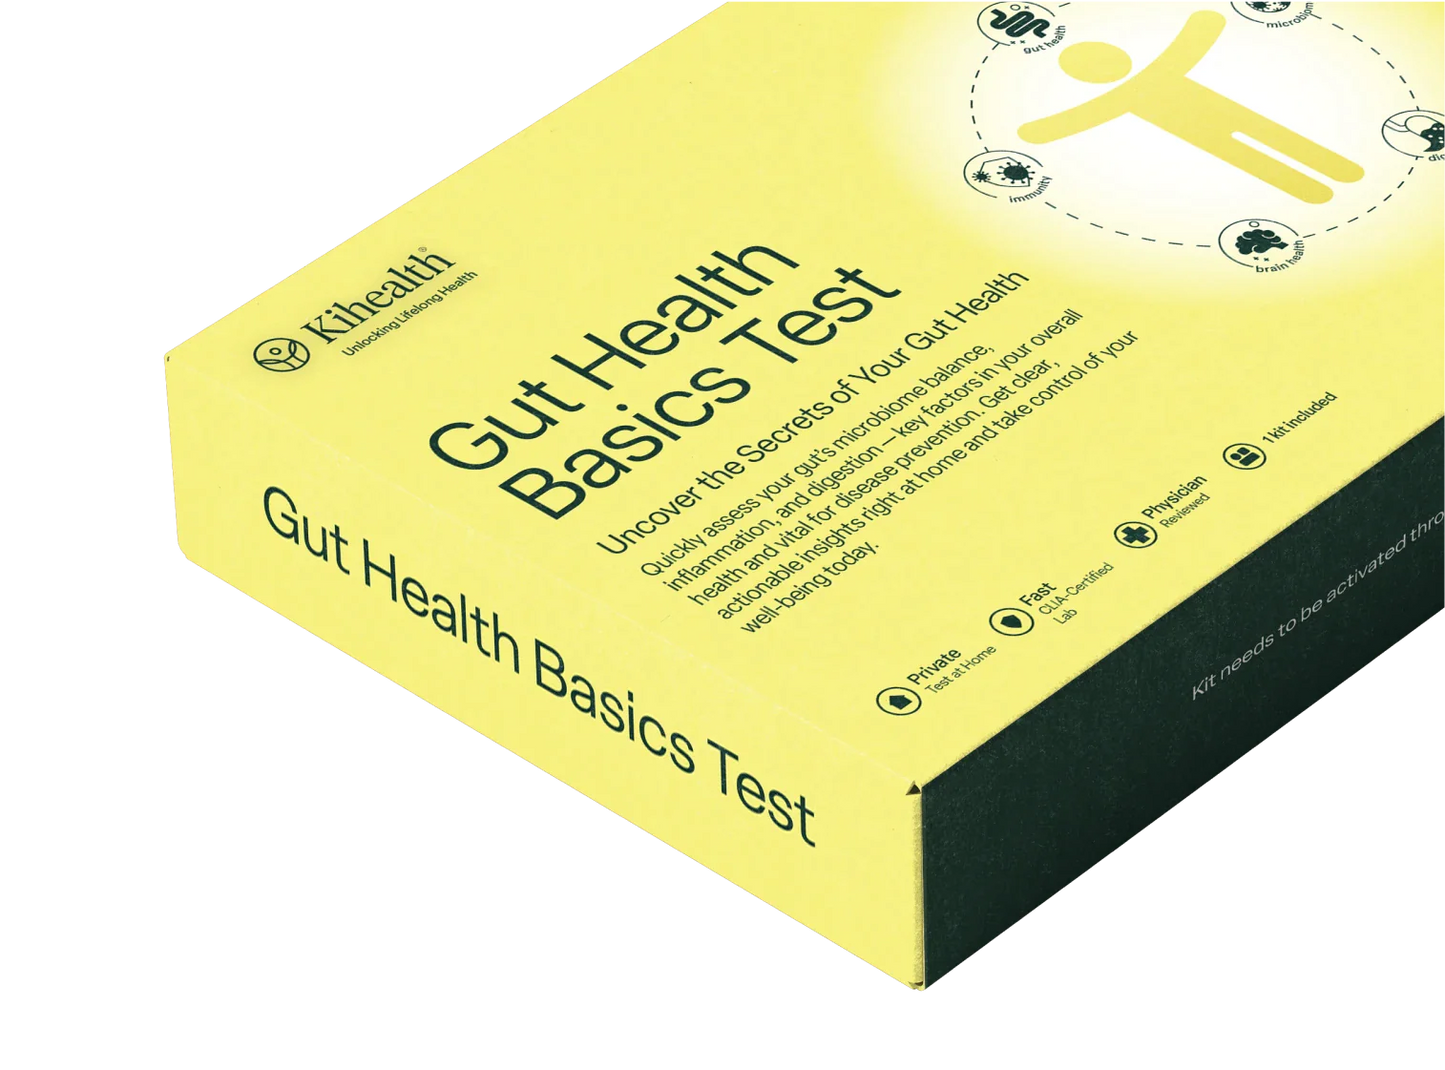 Gut Health Basic Test